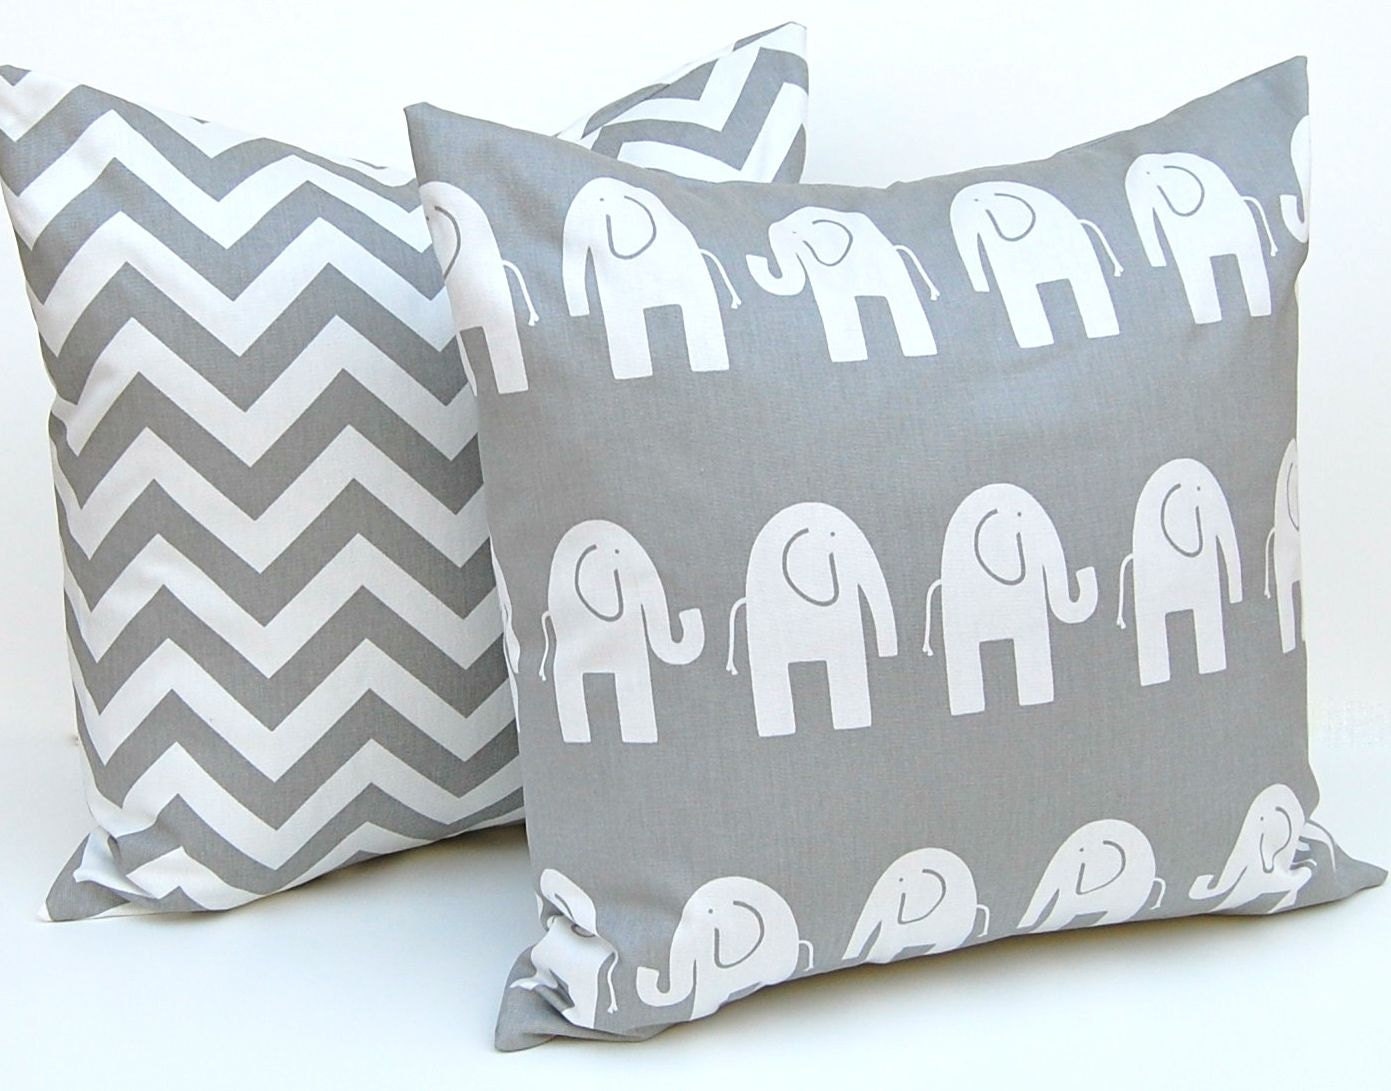 Pillow Decorative Pillows Children Decor Gray Animal Pillow Covers Accent Pillows Nursery Decor 16 x 16 Inches Elephant and Chevron Prints